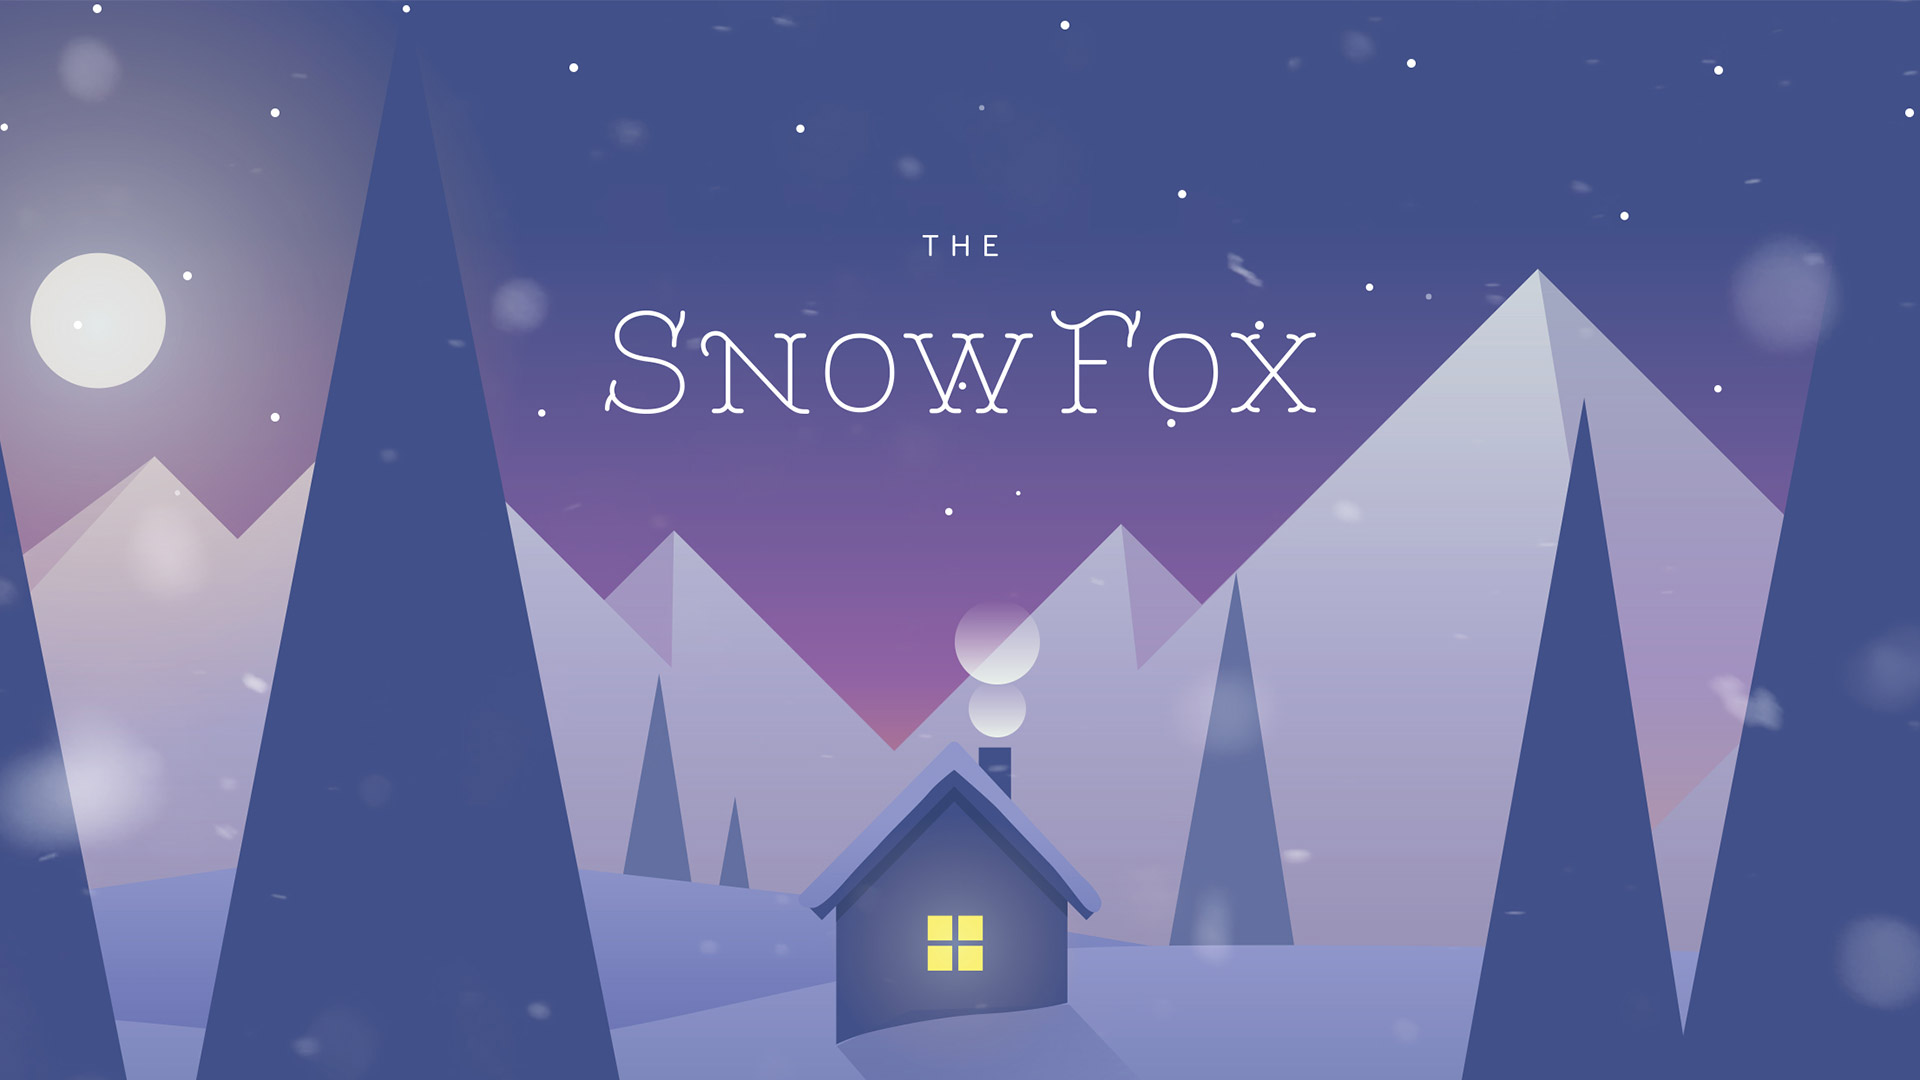 The Snow Fox